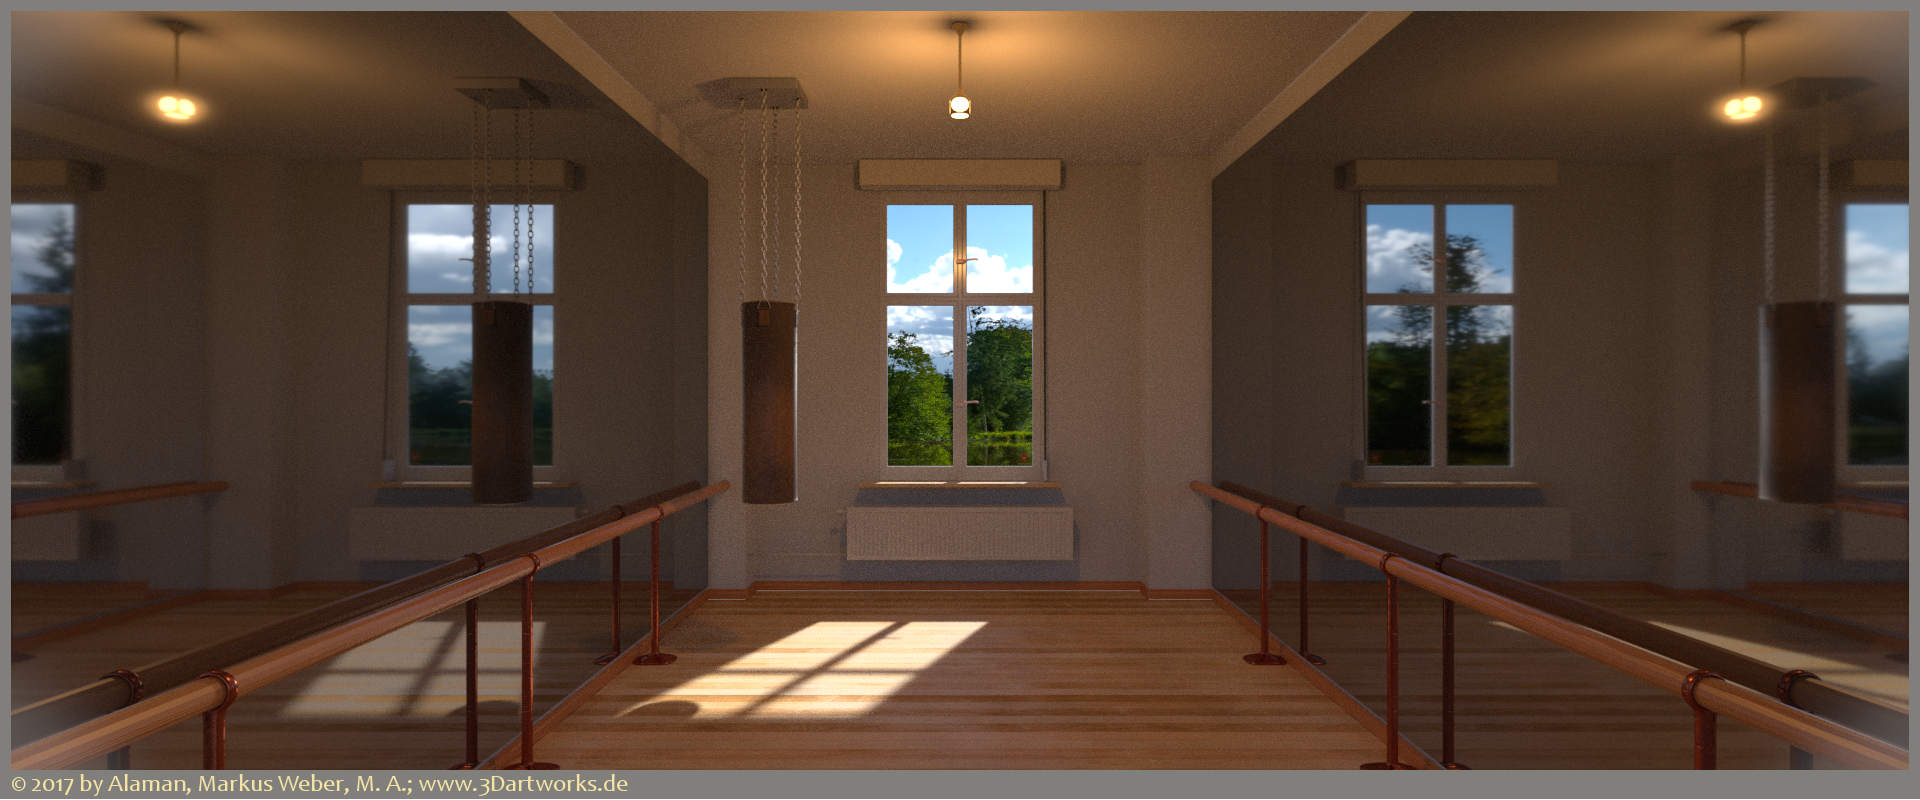 Interior design: narrow room sold